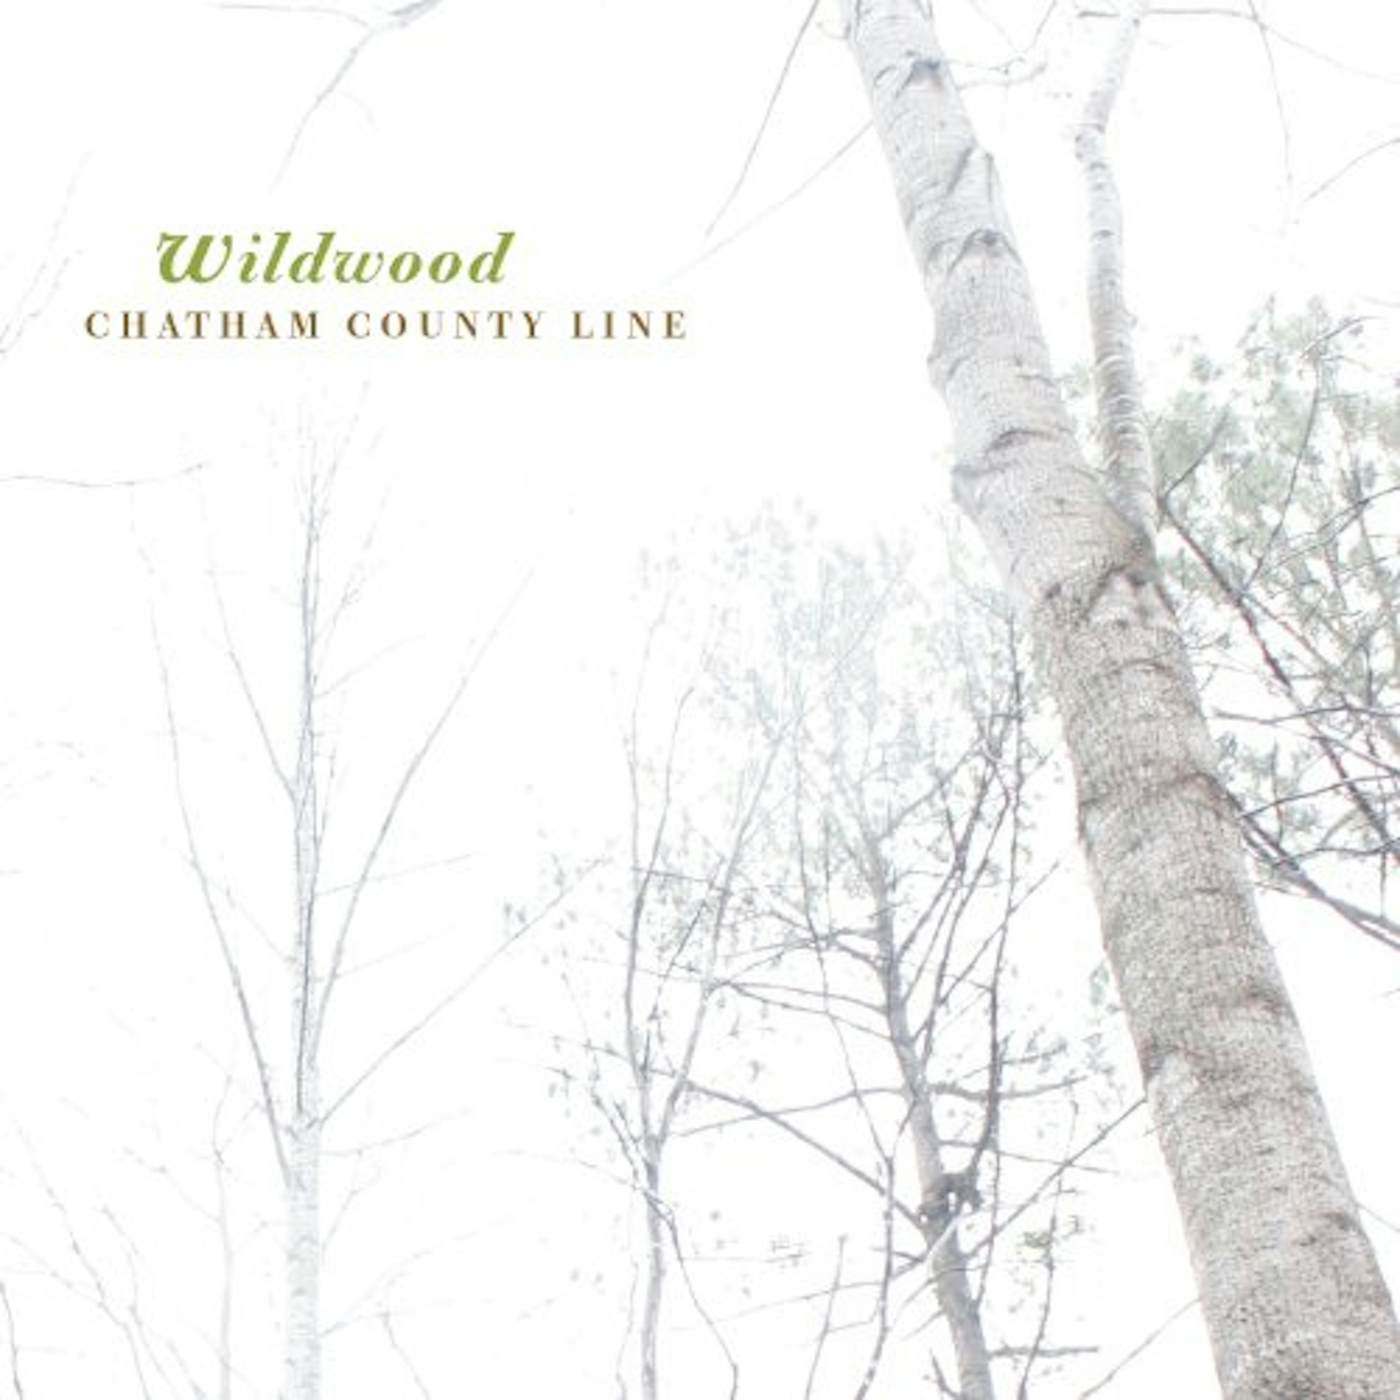 Chatham County Line Wildwood Vinyl Record